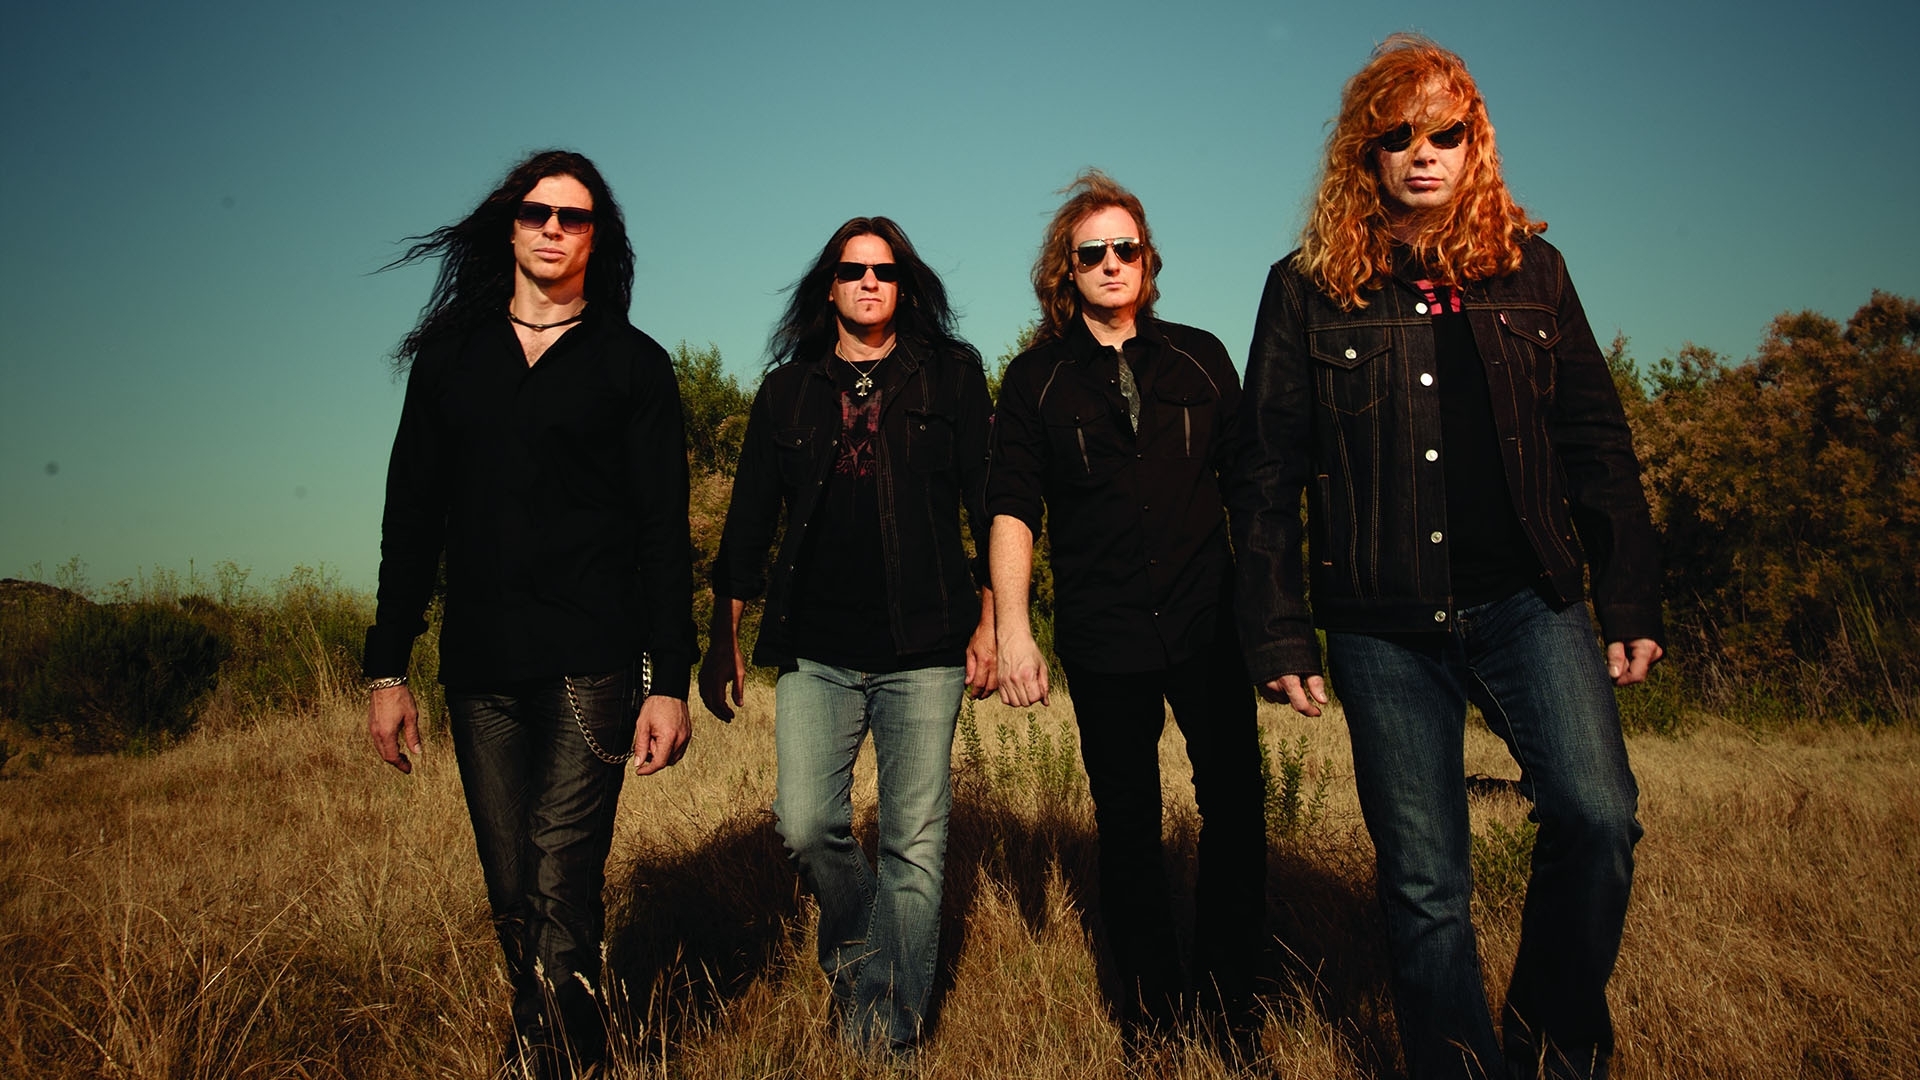 Download mobile wallpaper Megadeth, Music for free.